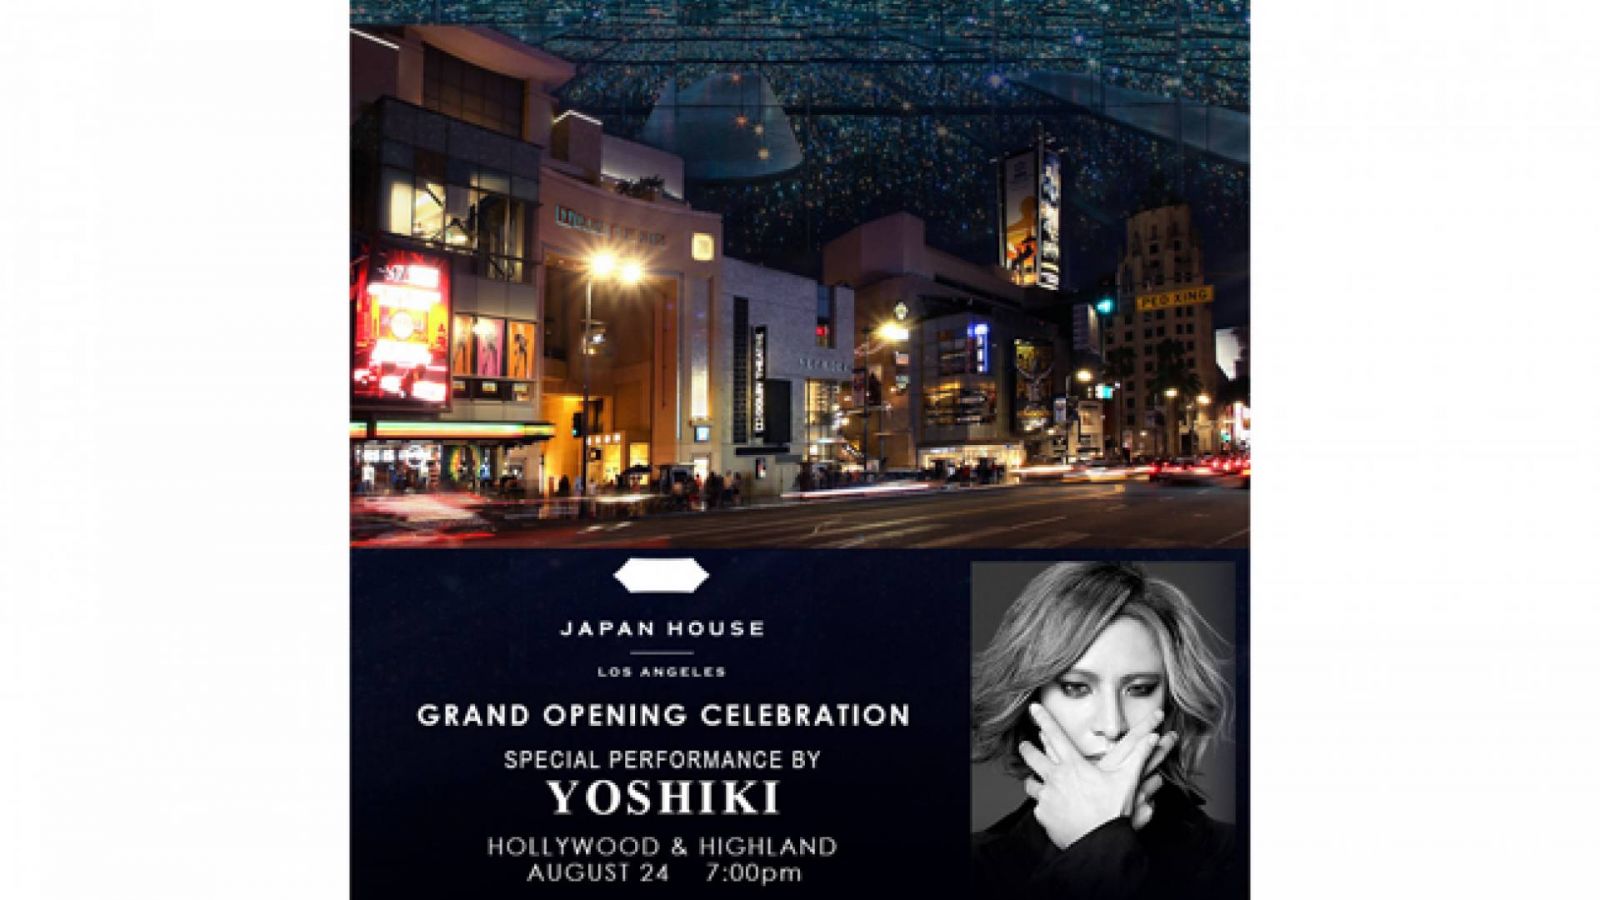 YOSHIKI actuará en la celebración de apertura de Japan House en Hollywood © YOSHIKI